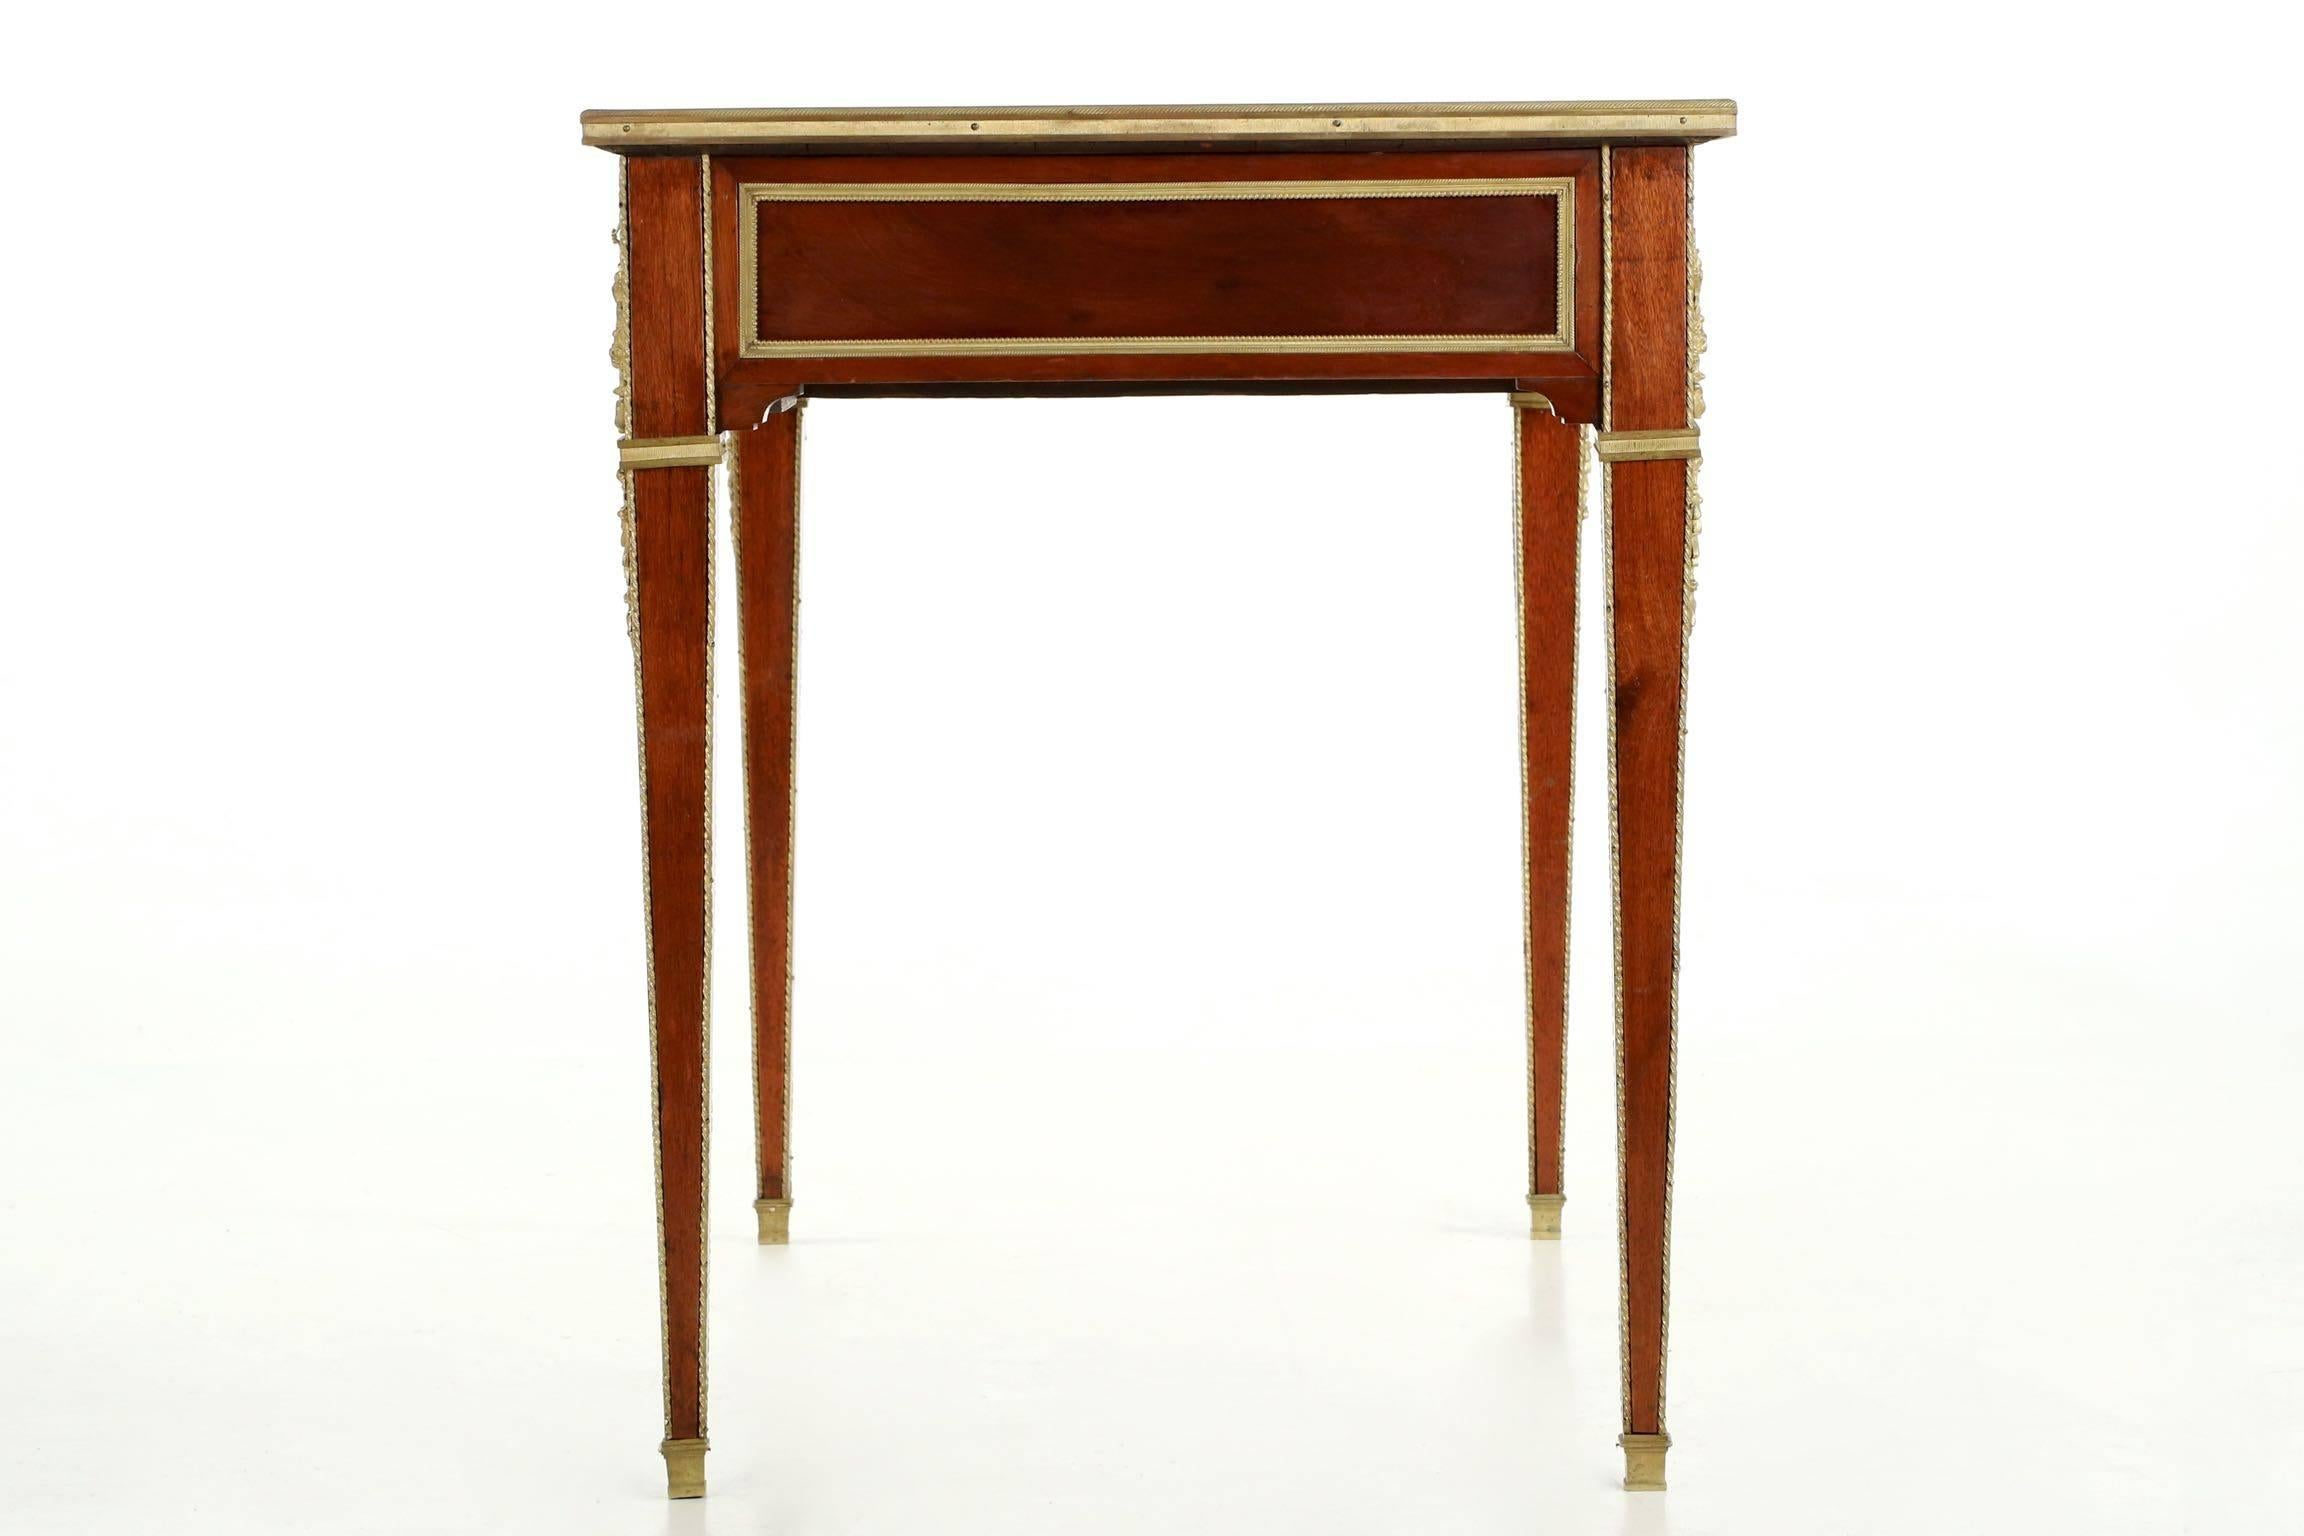 20th Century French Neoclassical Antique Mahogany Bureau Plat Writing Table Desk (Vergoldet)